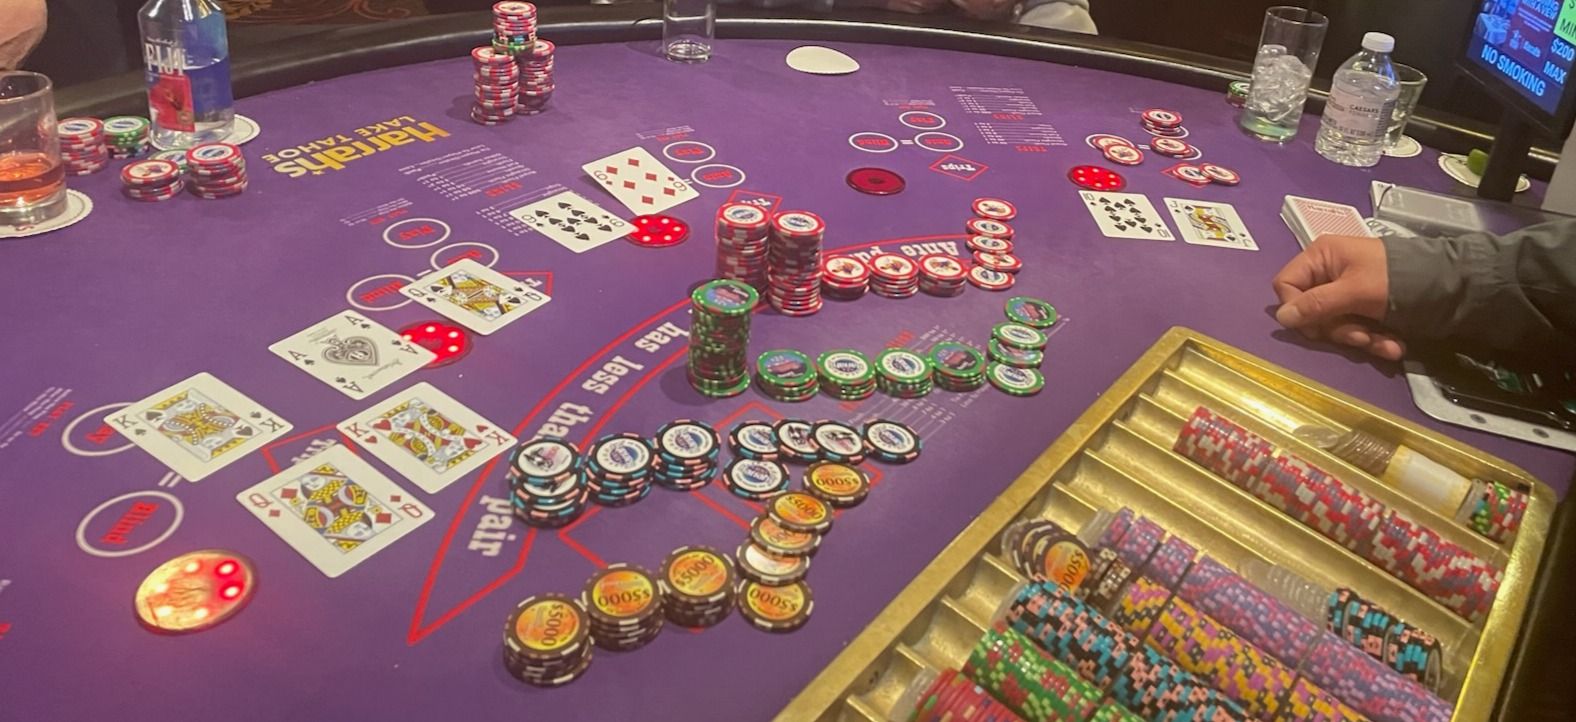 jackpot casino las vegas